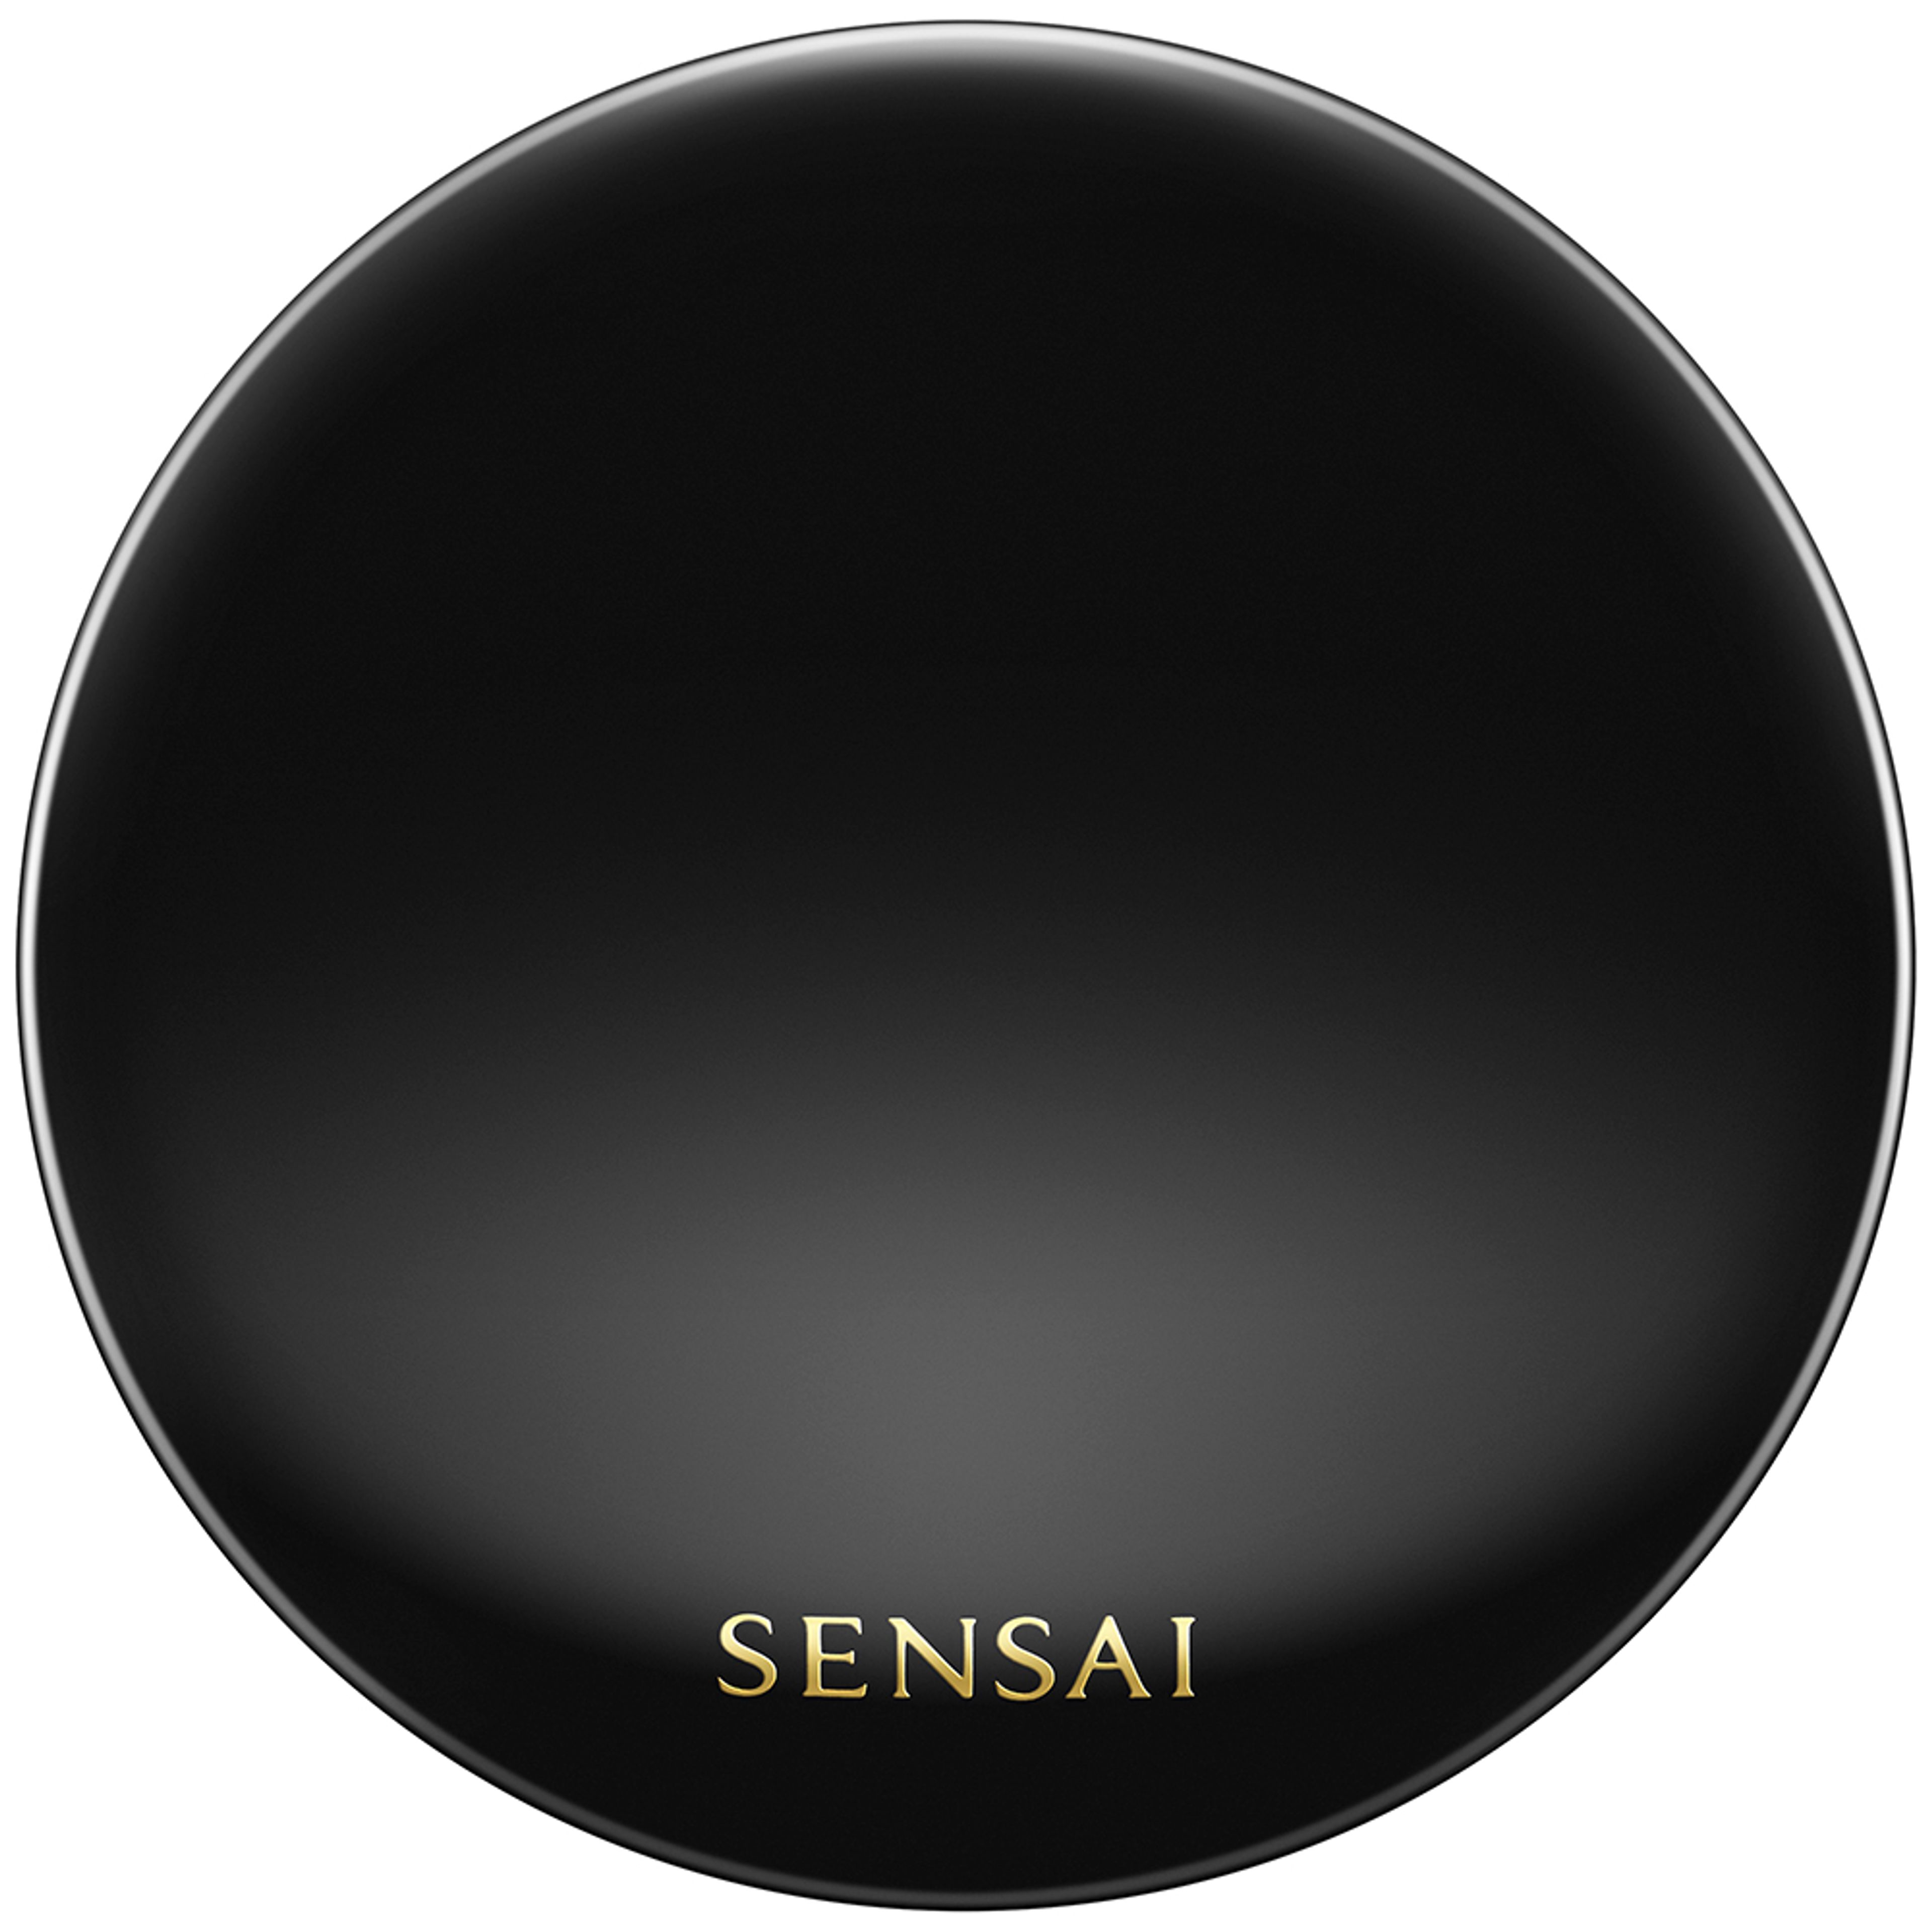 Sensai Compact Case For Total Finish 2